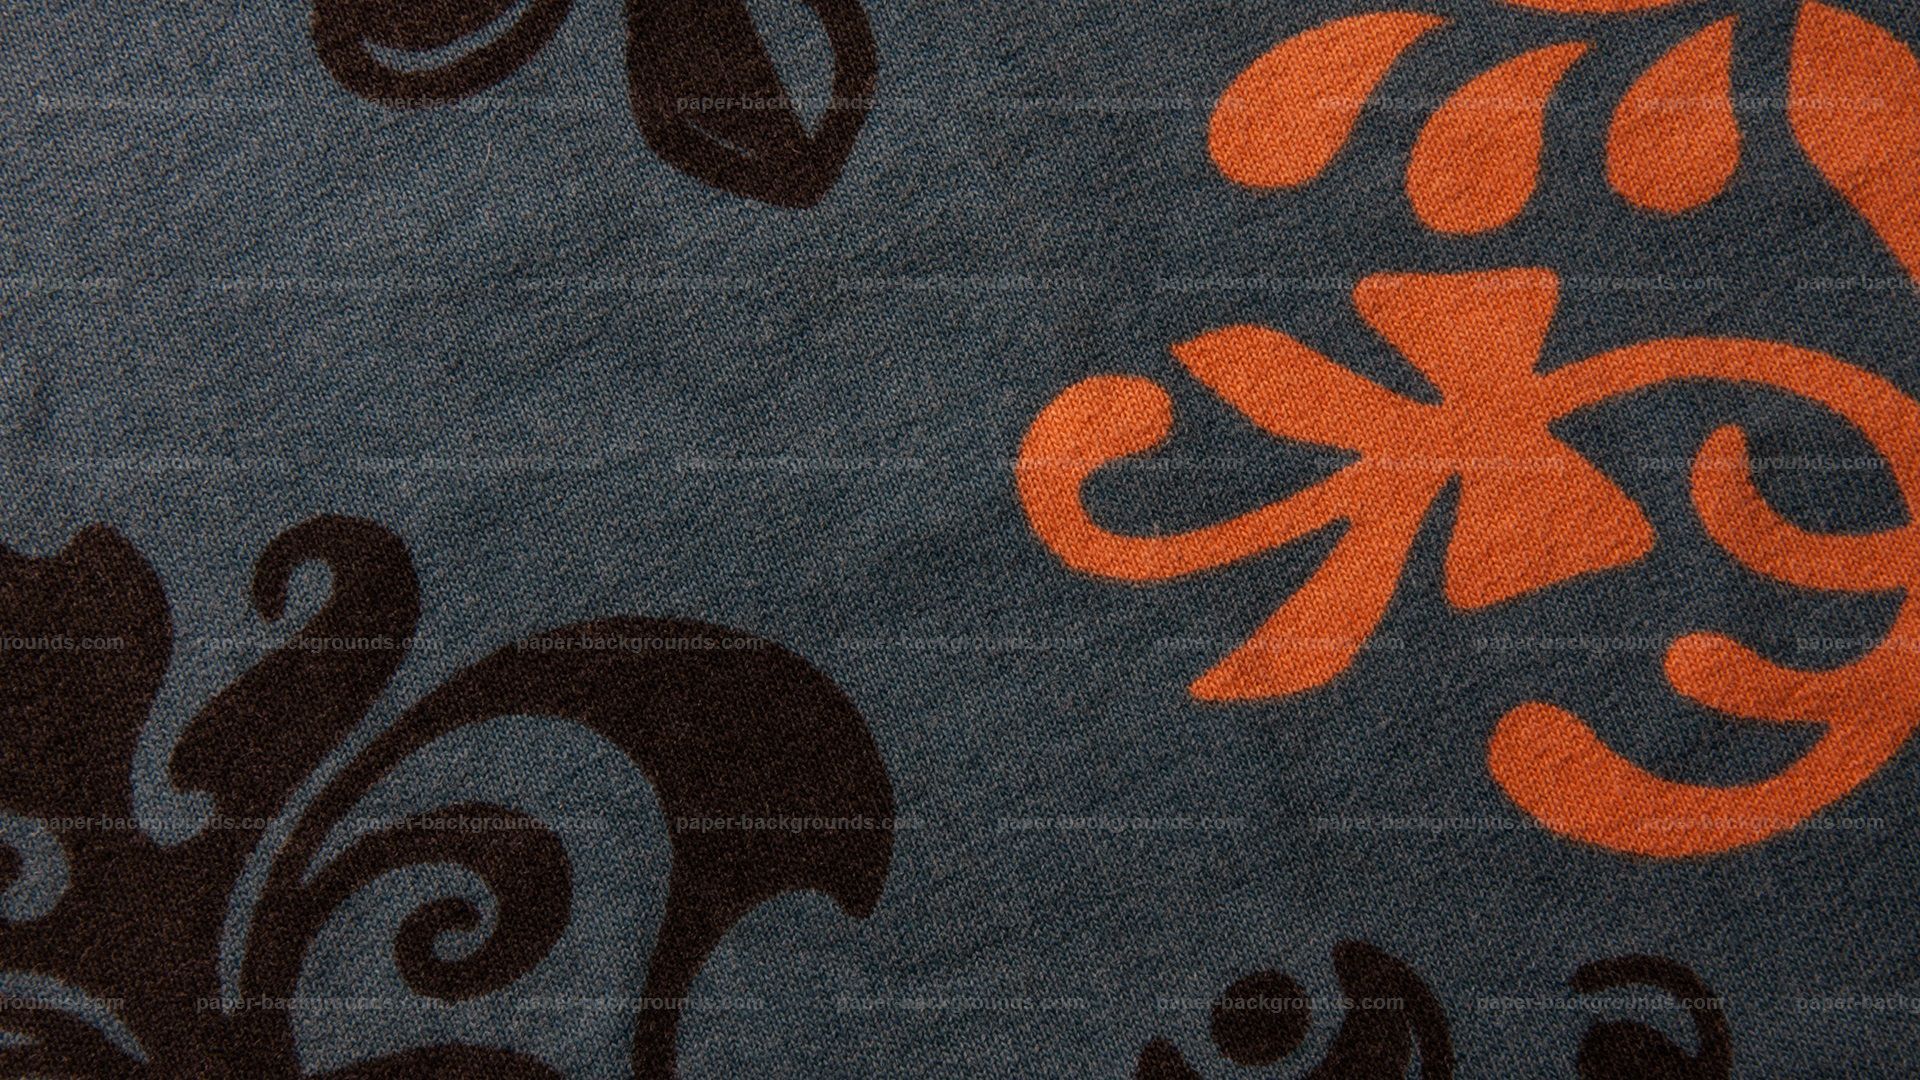 Paper Backgrounds | Black Orange Floral Design On Gray Fabric HD